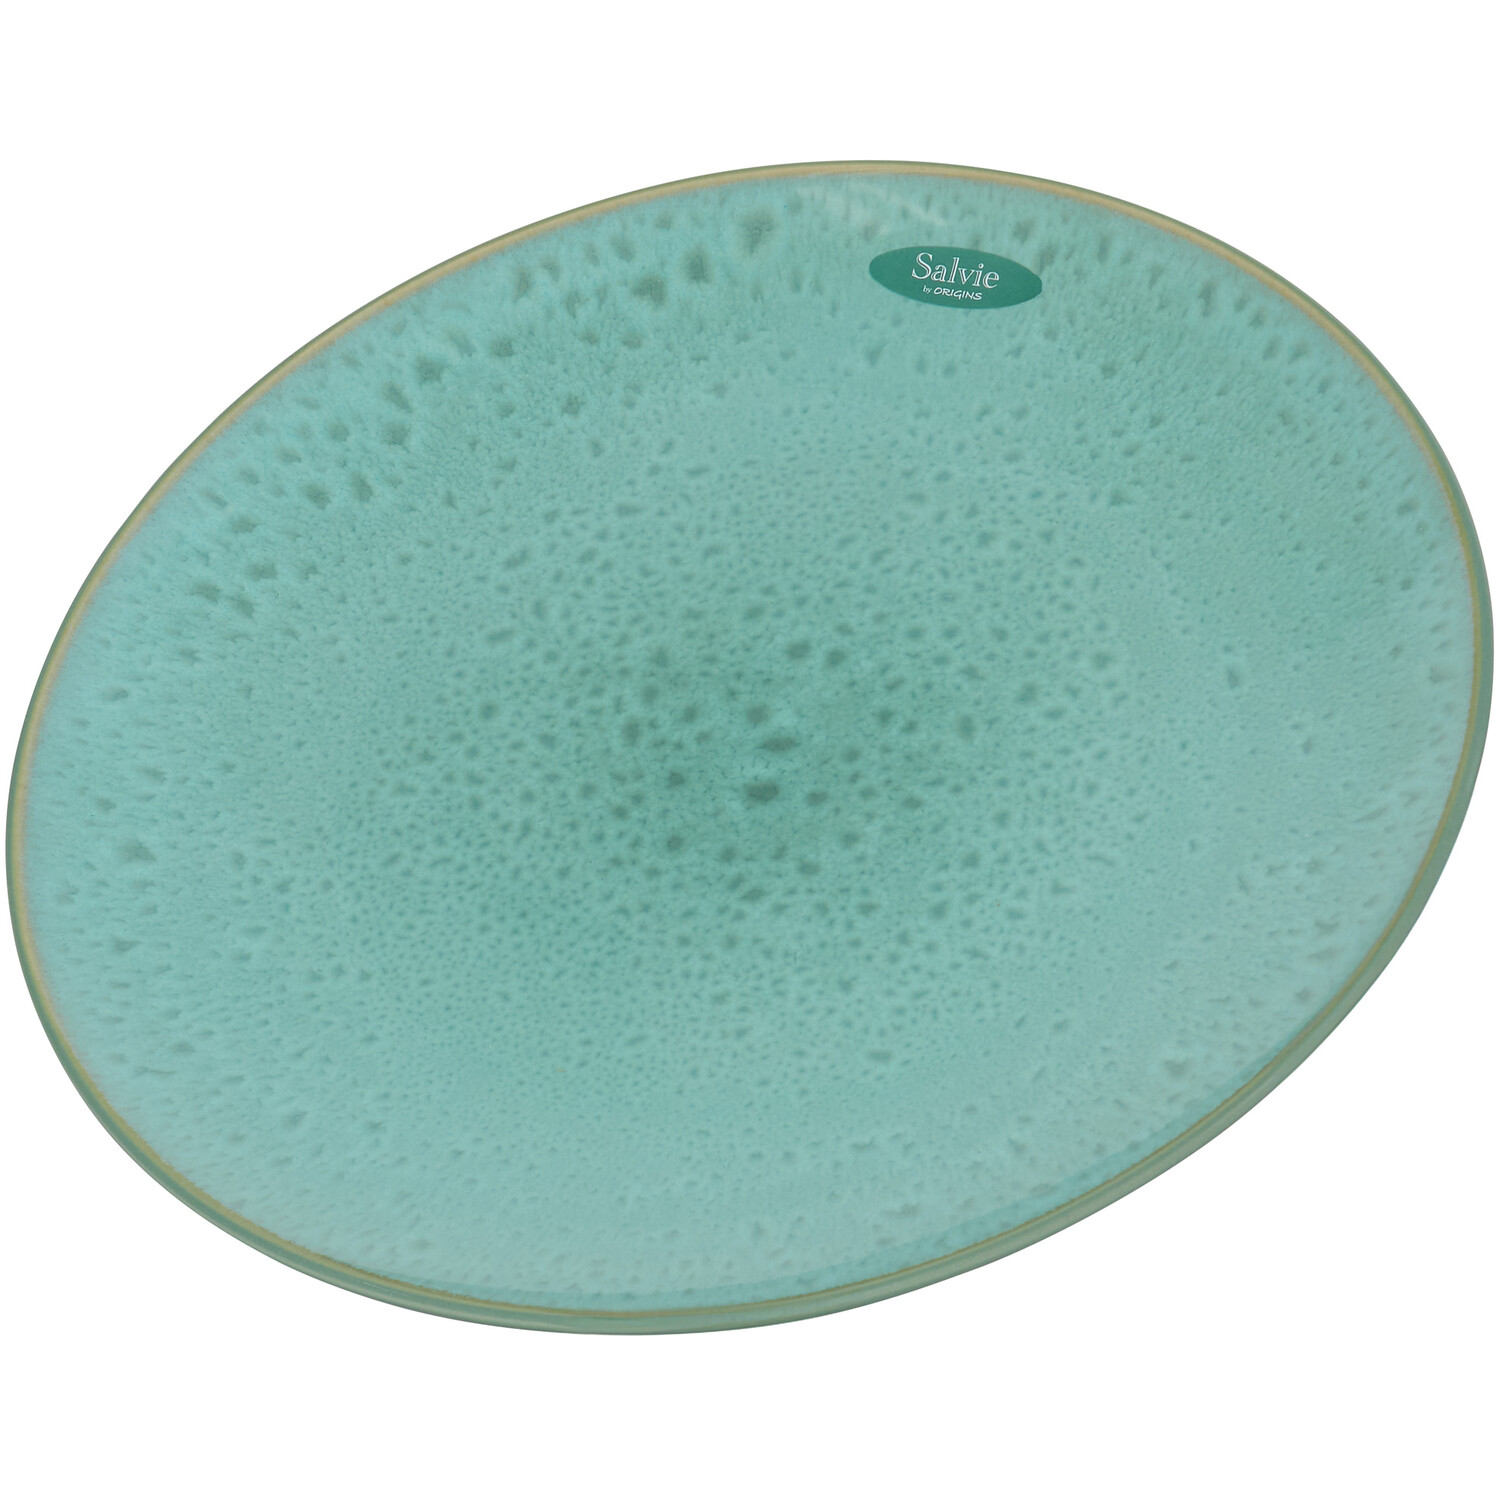 Salvie Reactive Glaze Plate - Sea Green / Dinner Plate Image 2